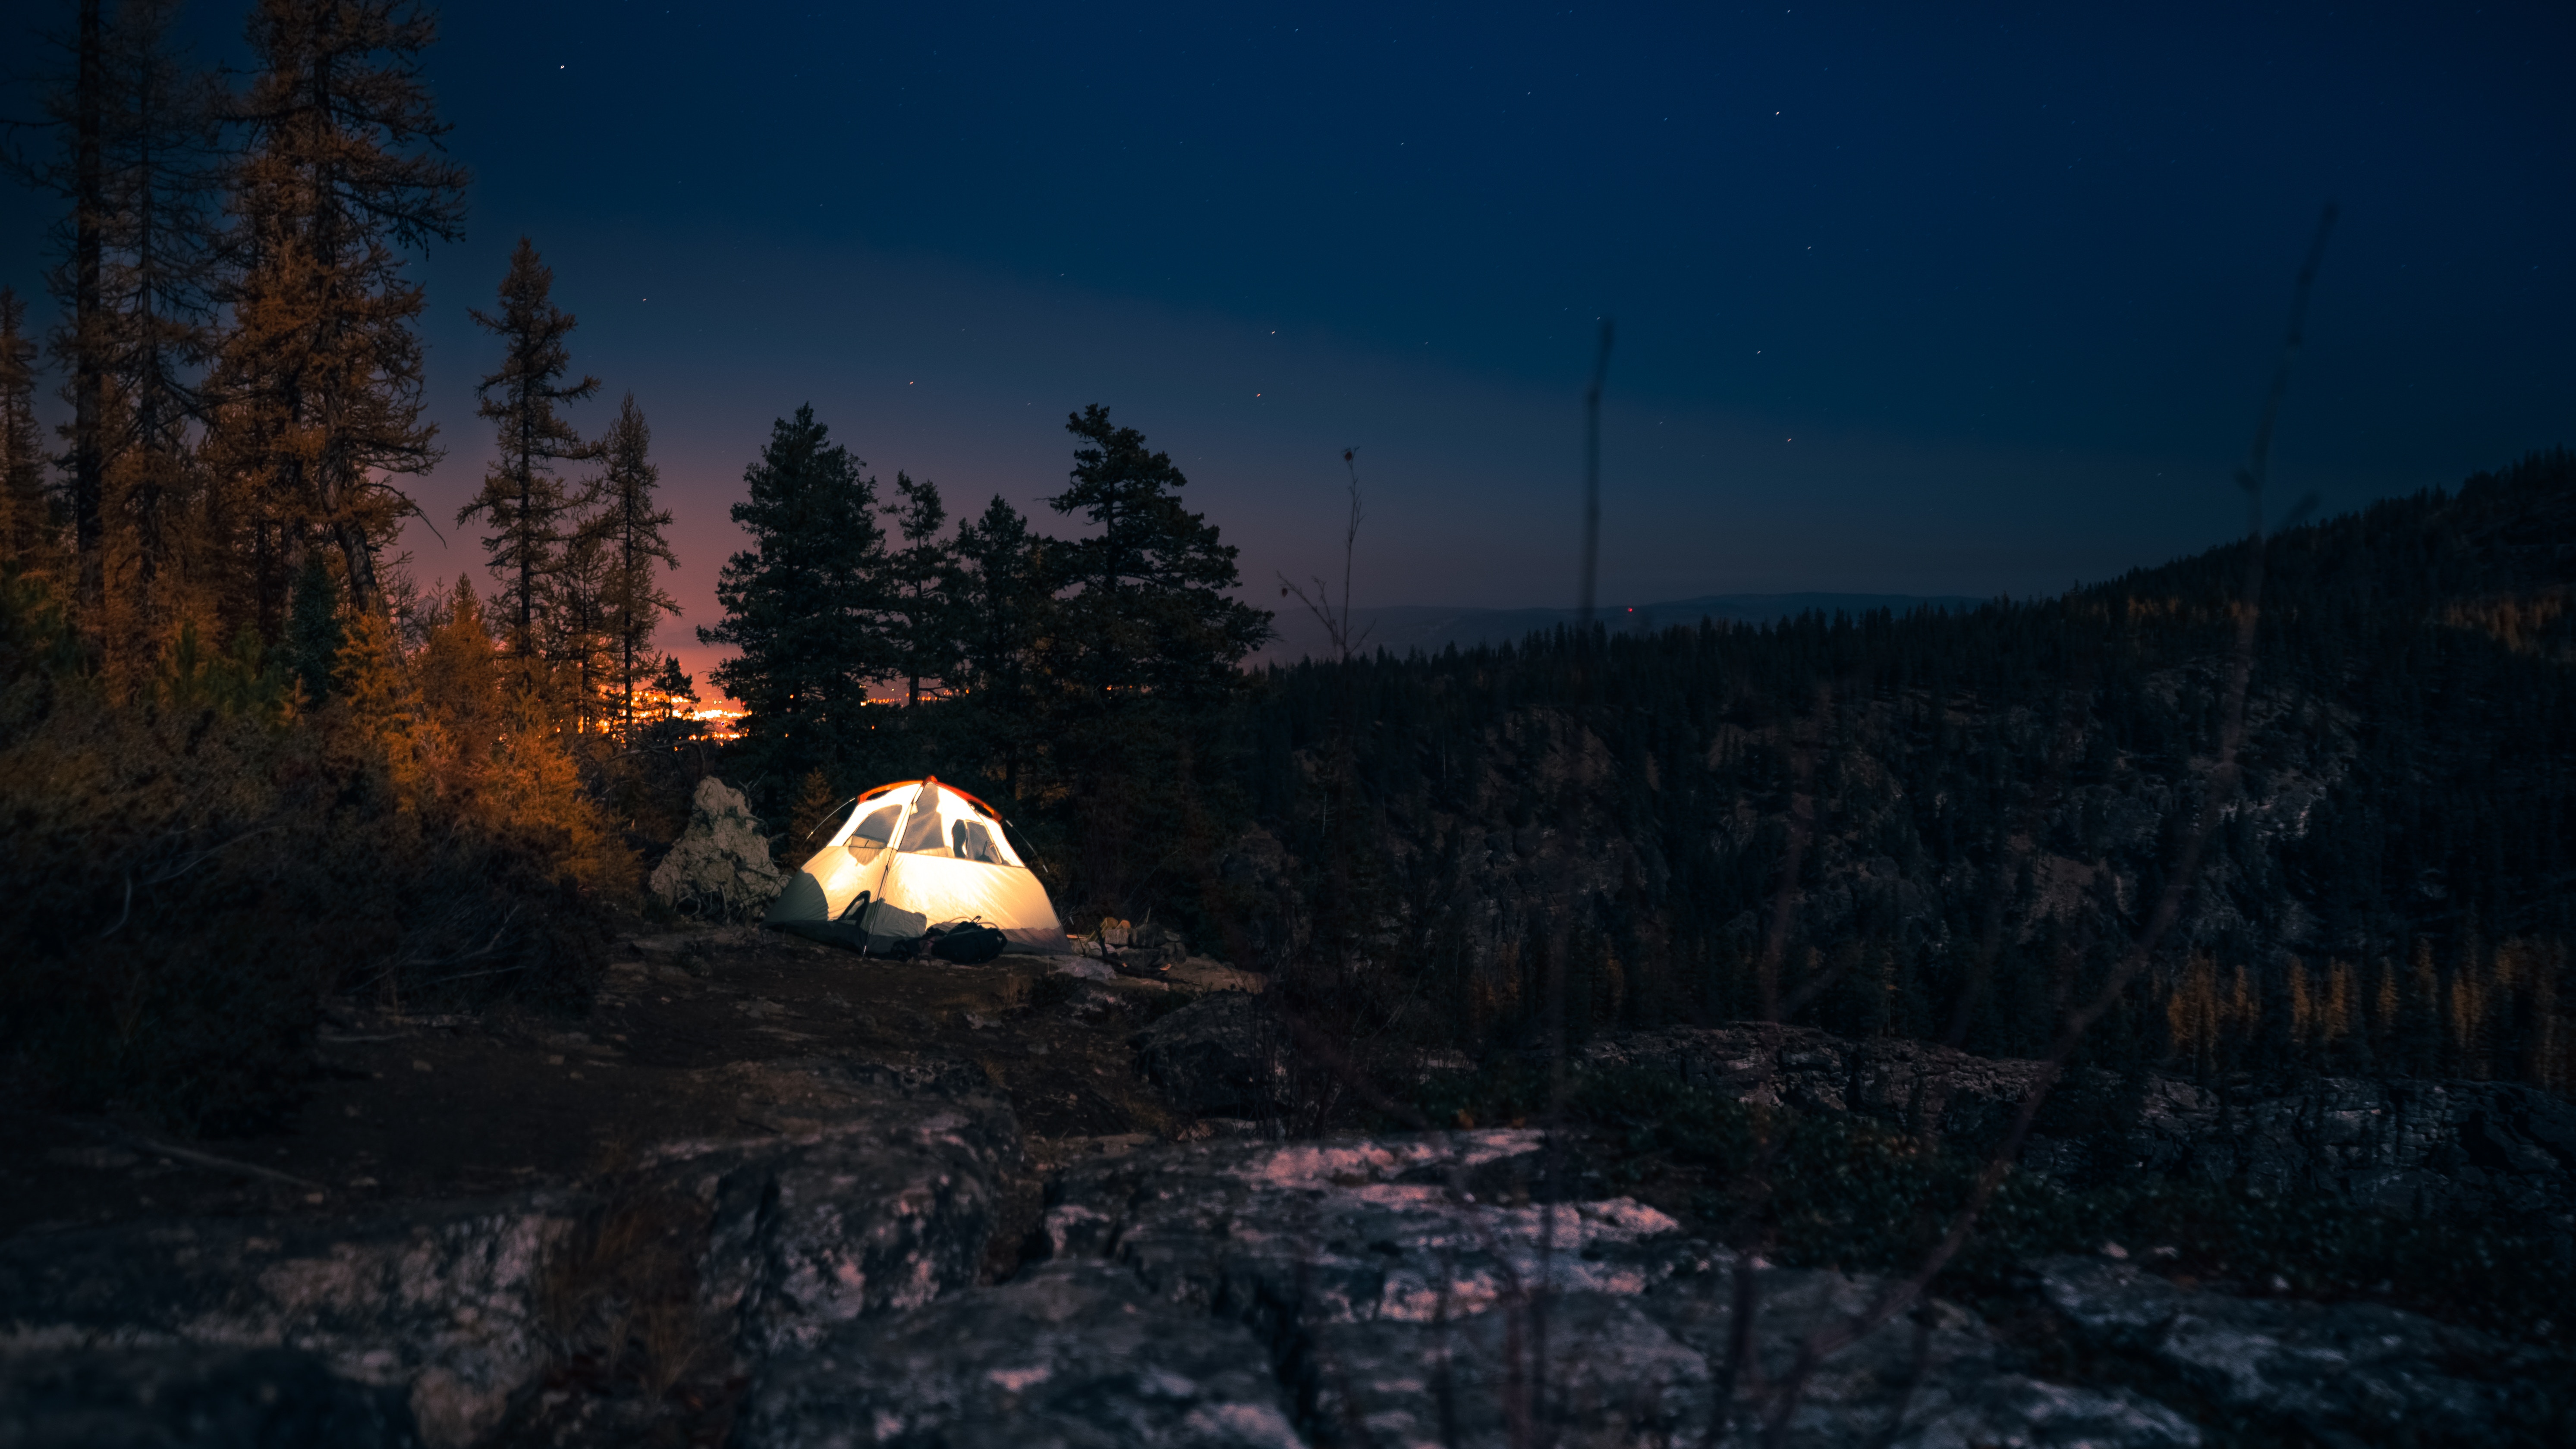 night, dark, trees, starry sky, tent, camping, campsite